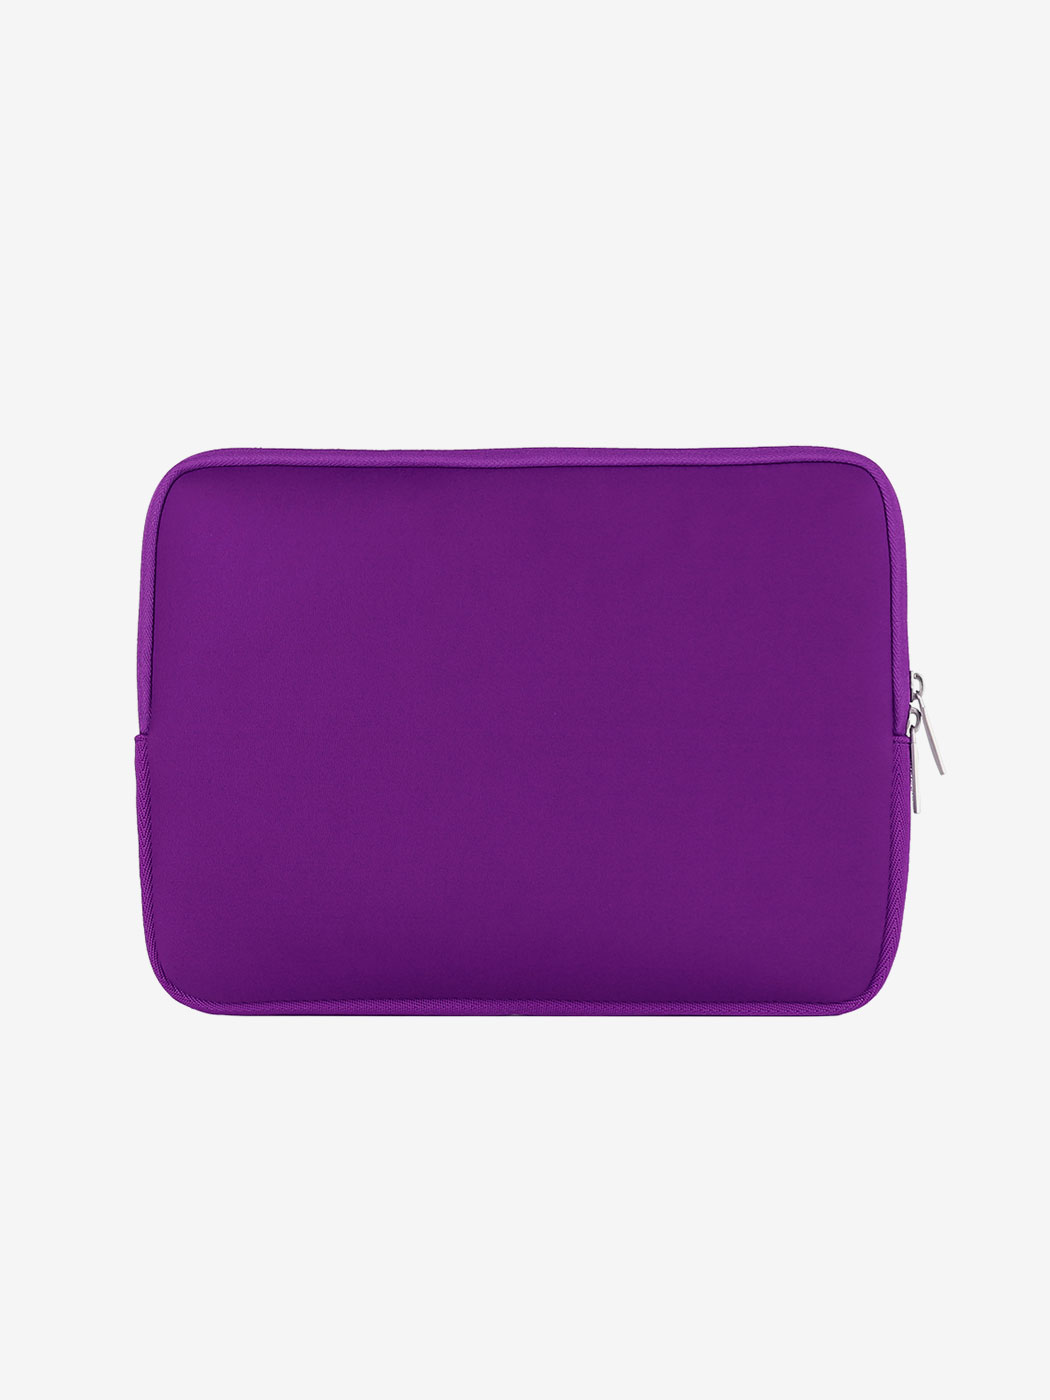 Pomologic Neoprene Sleeve MacBook front in purple